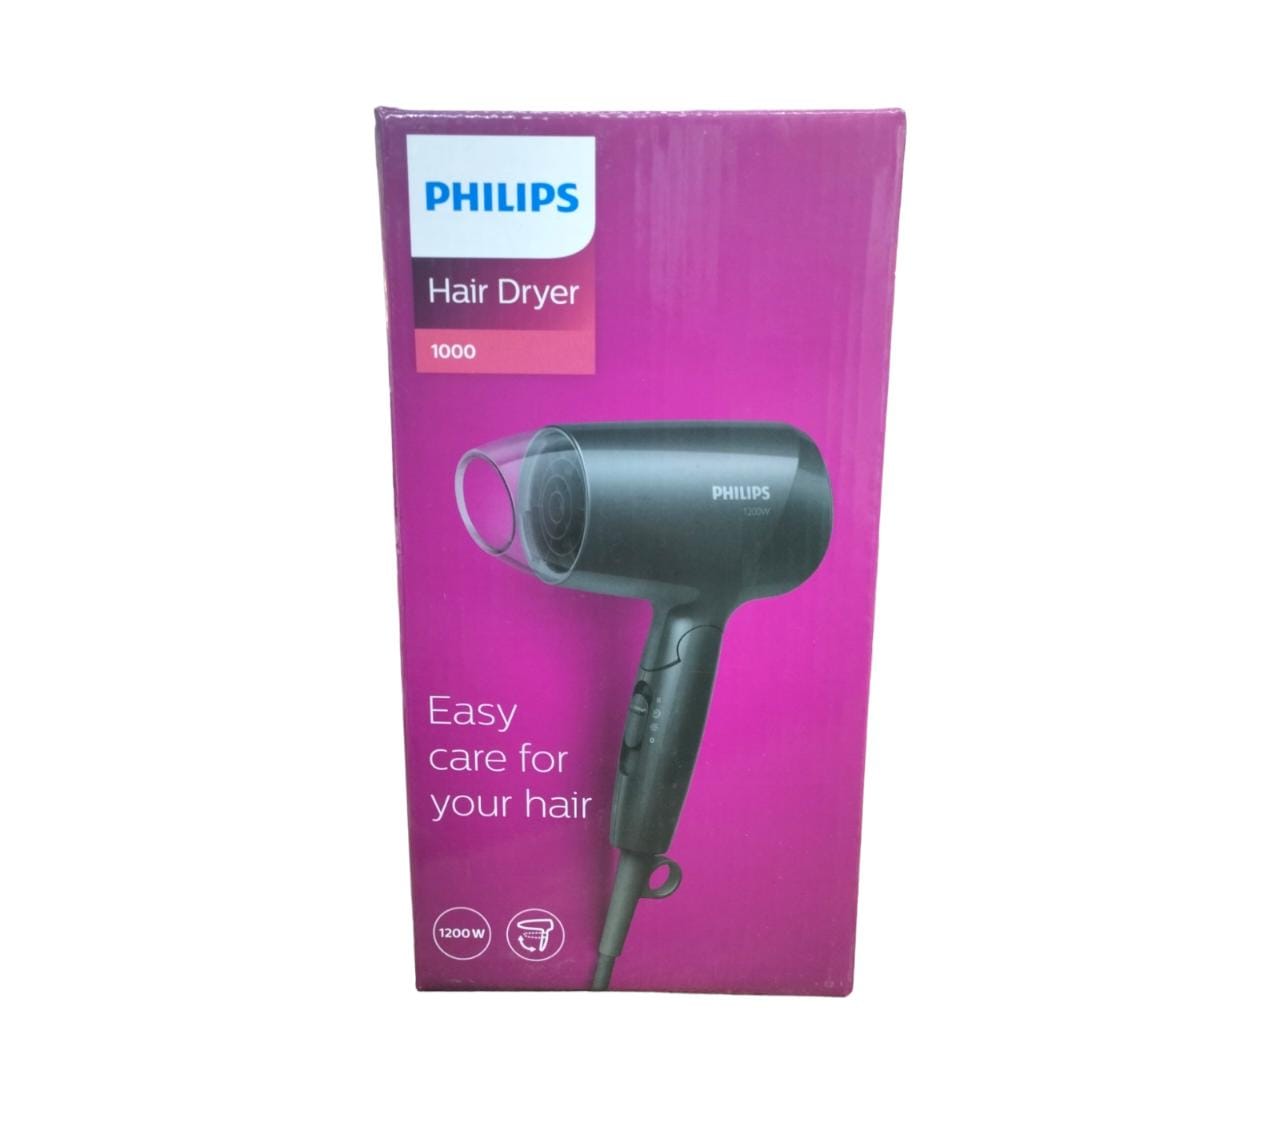 Philips hair dryer 